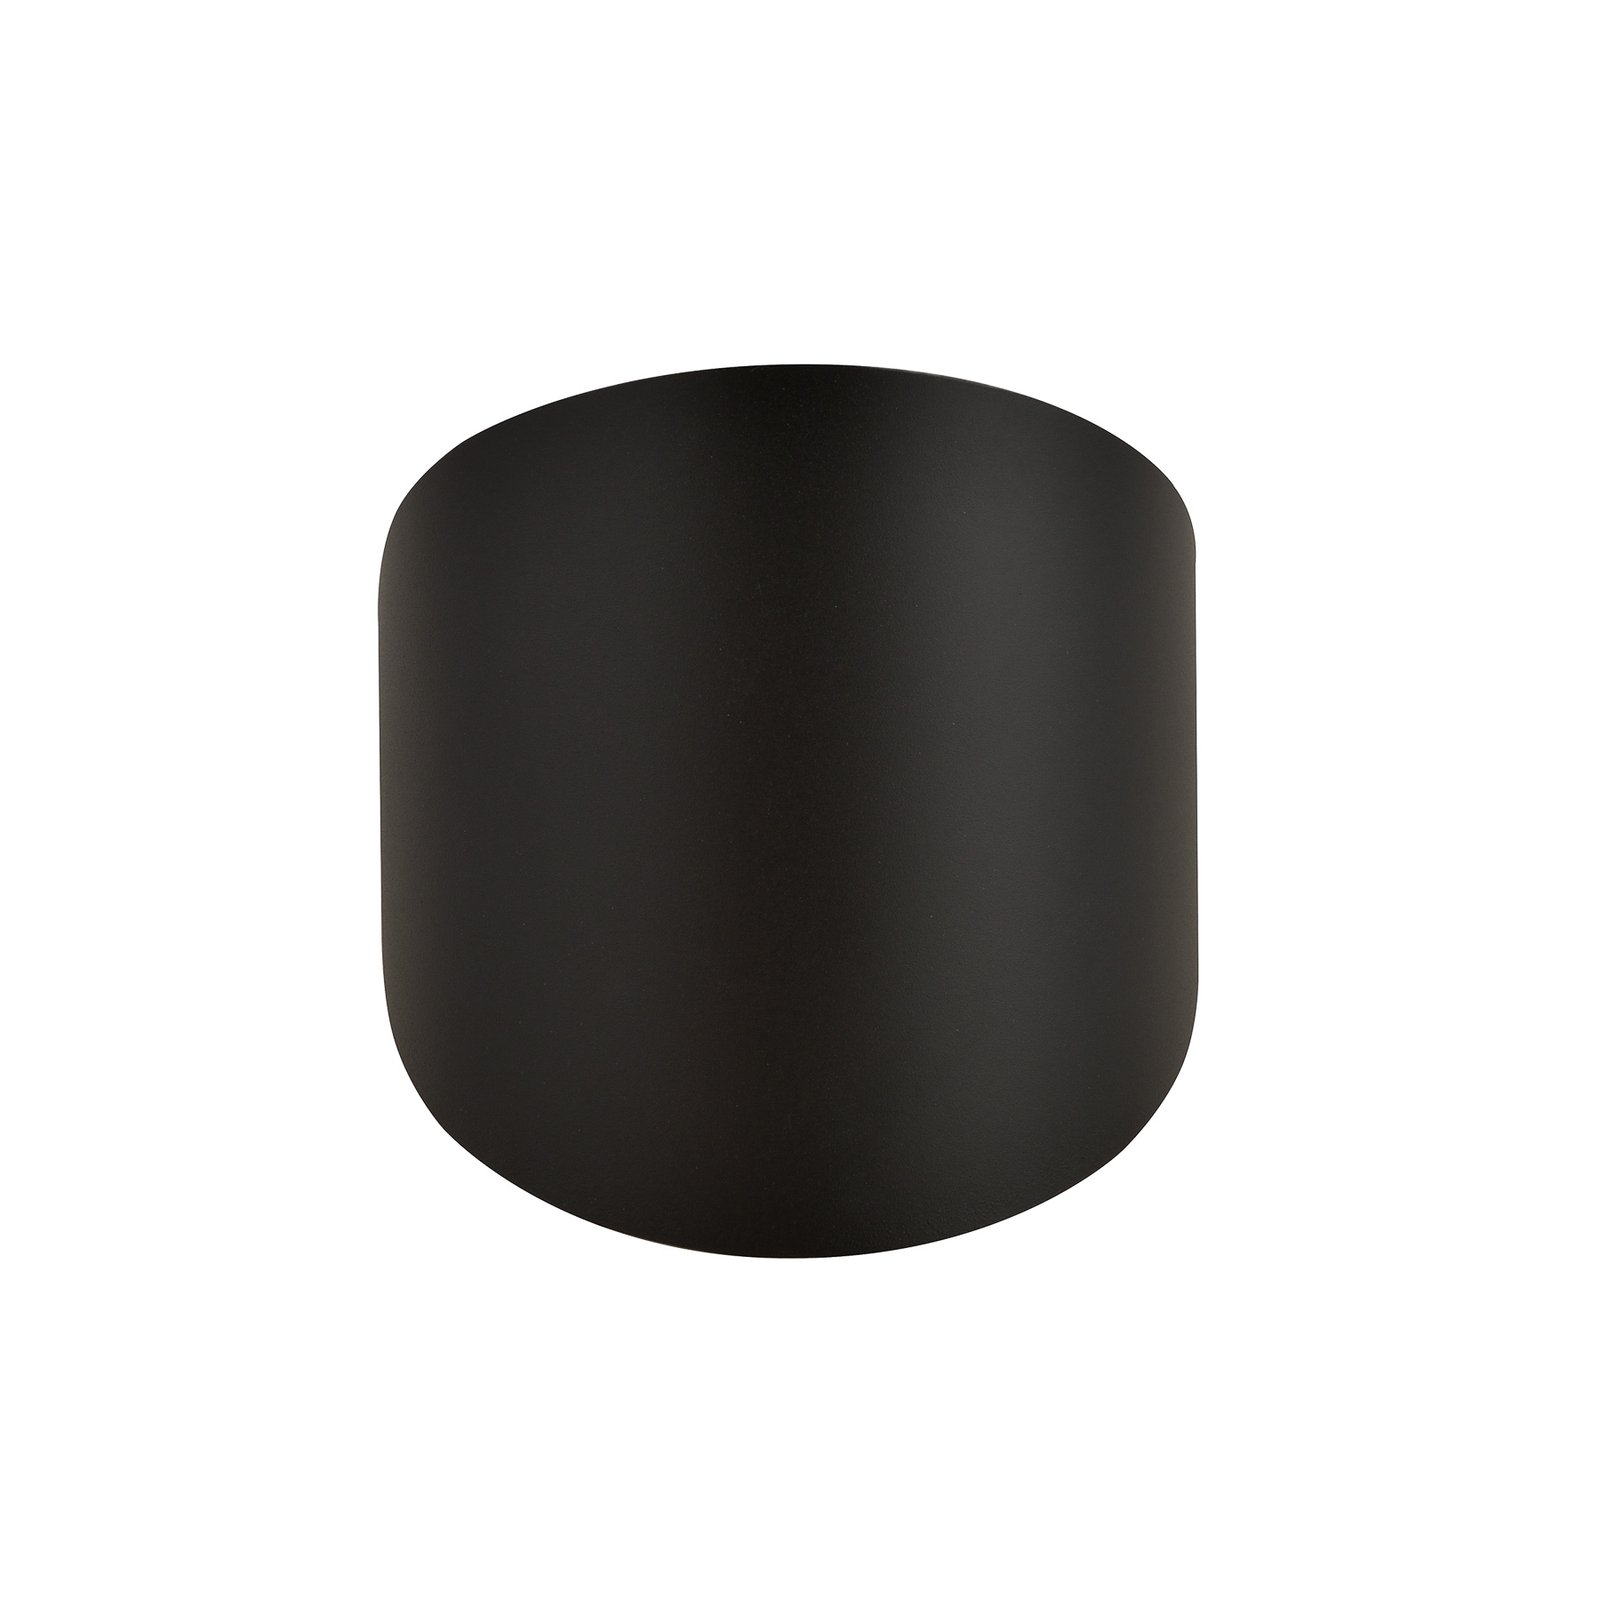 Stropné svietidlo Form 3, čierne, 20,5 x 22,5 cm